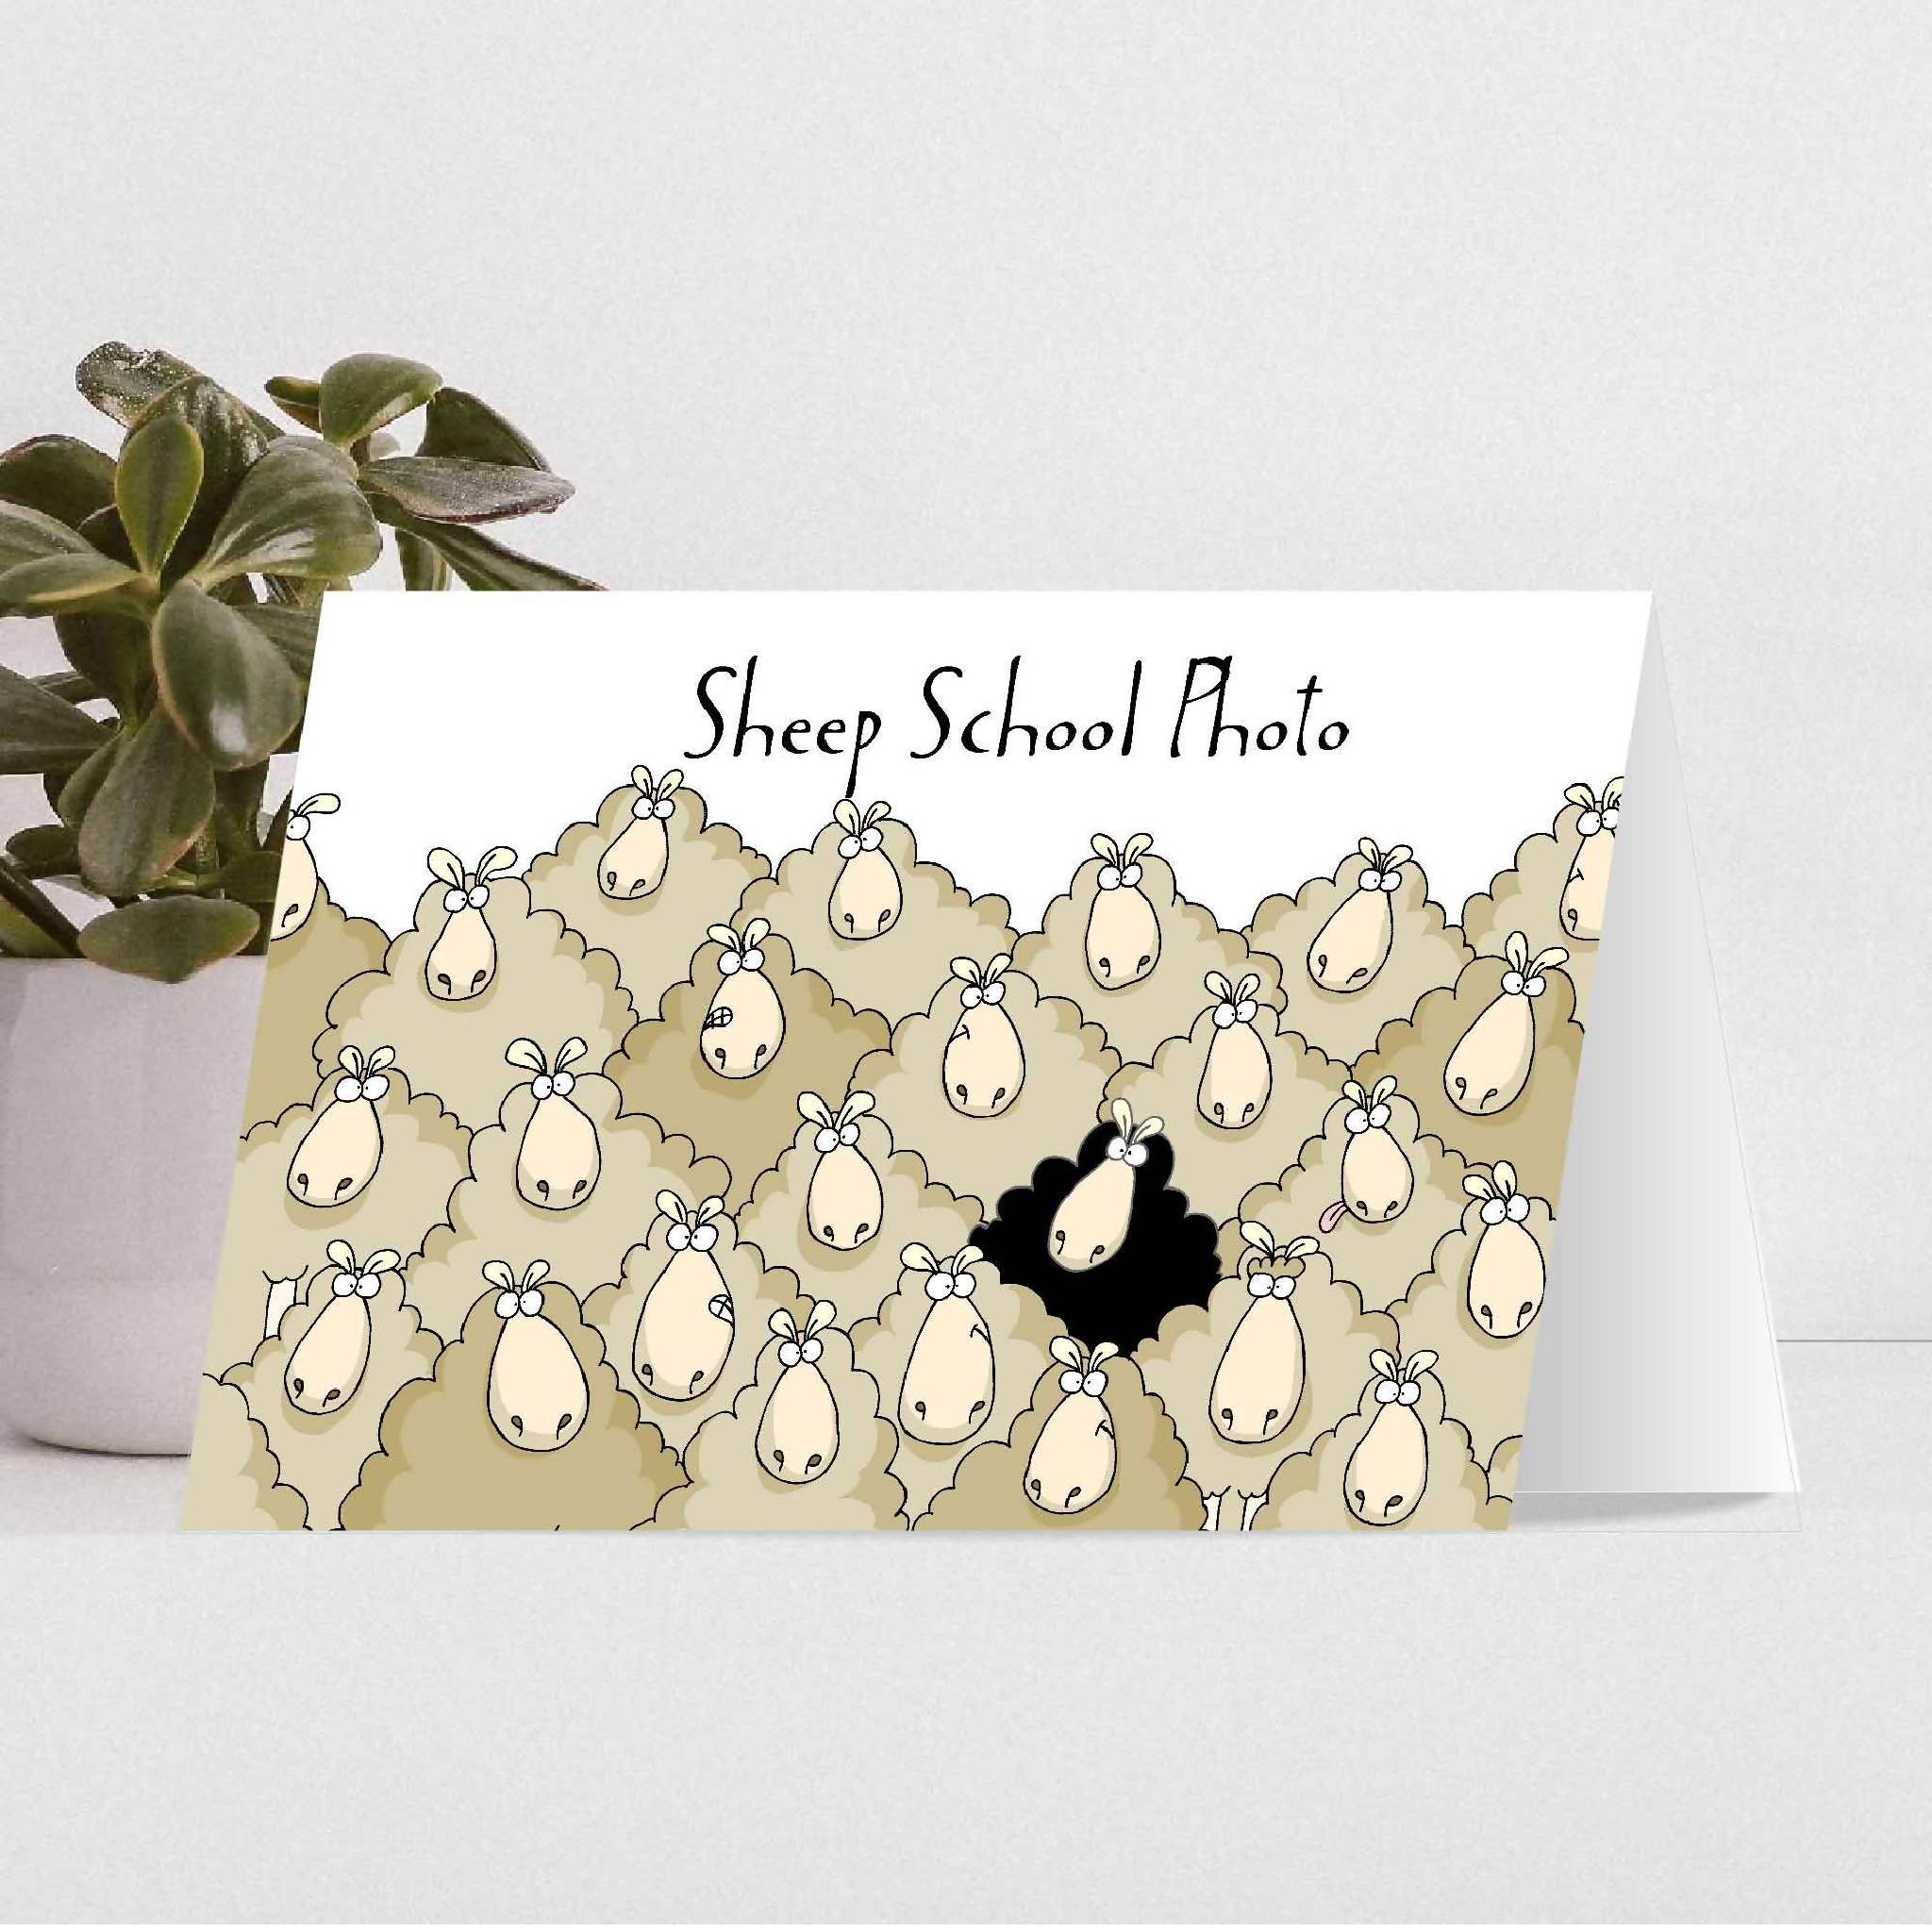 SHEEP SCHOOL PHOTO card